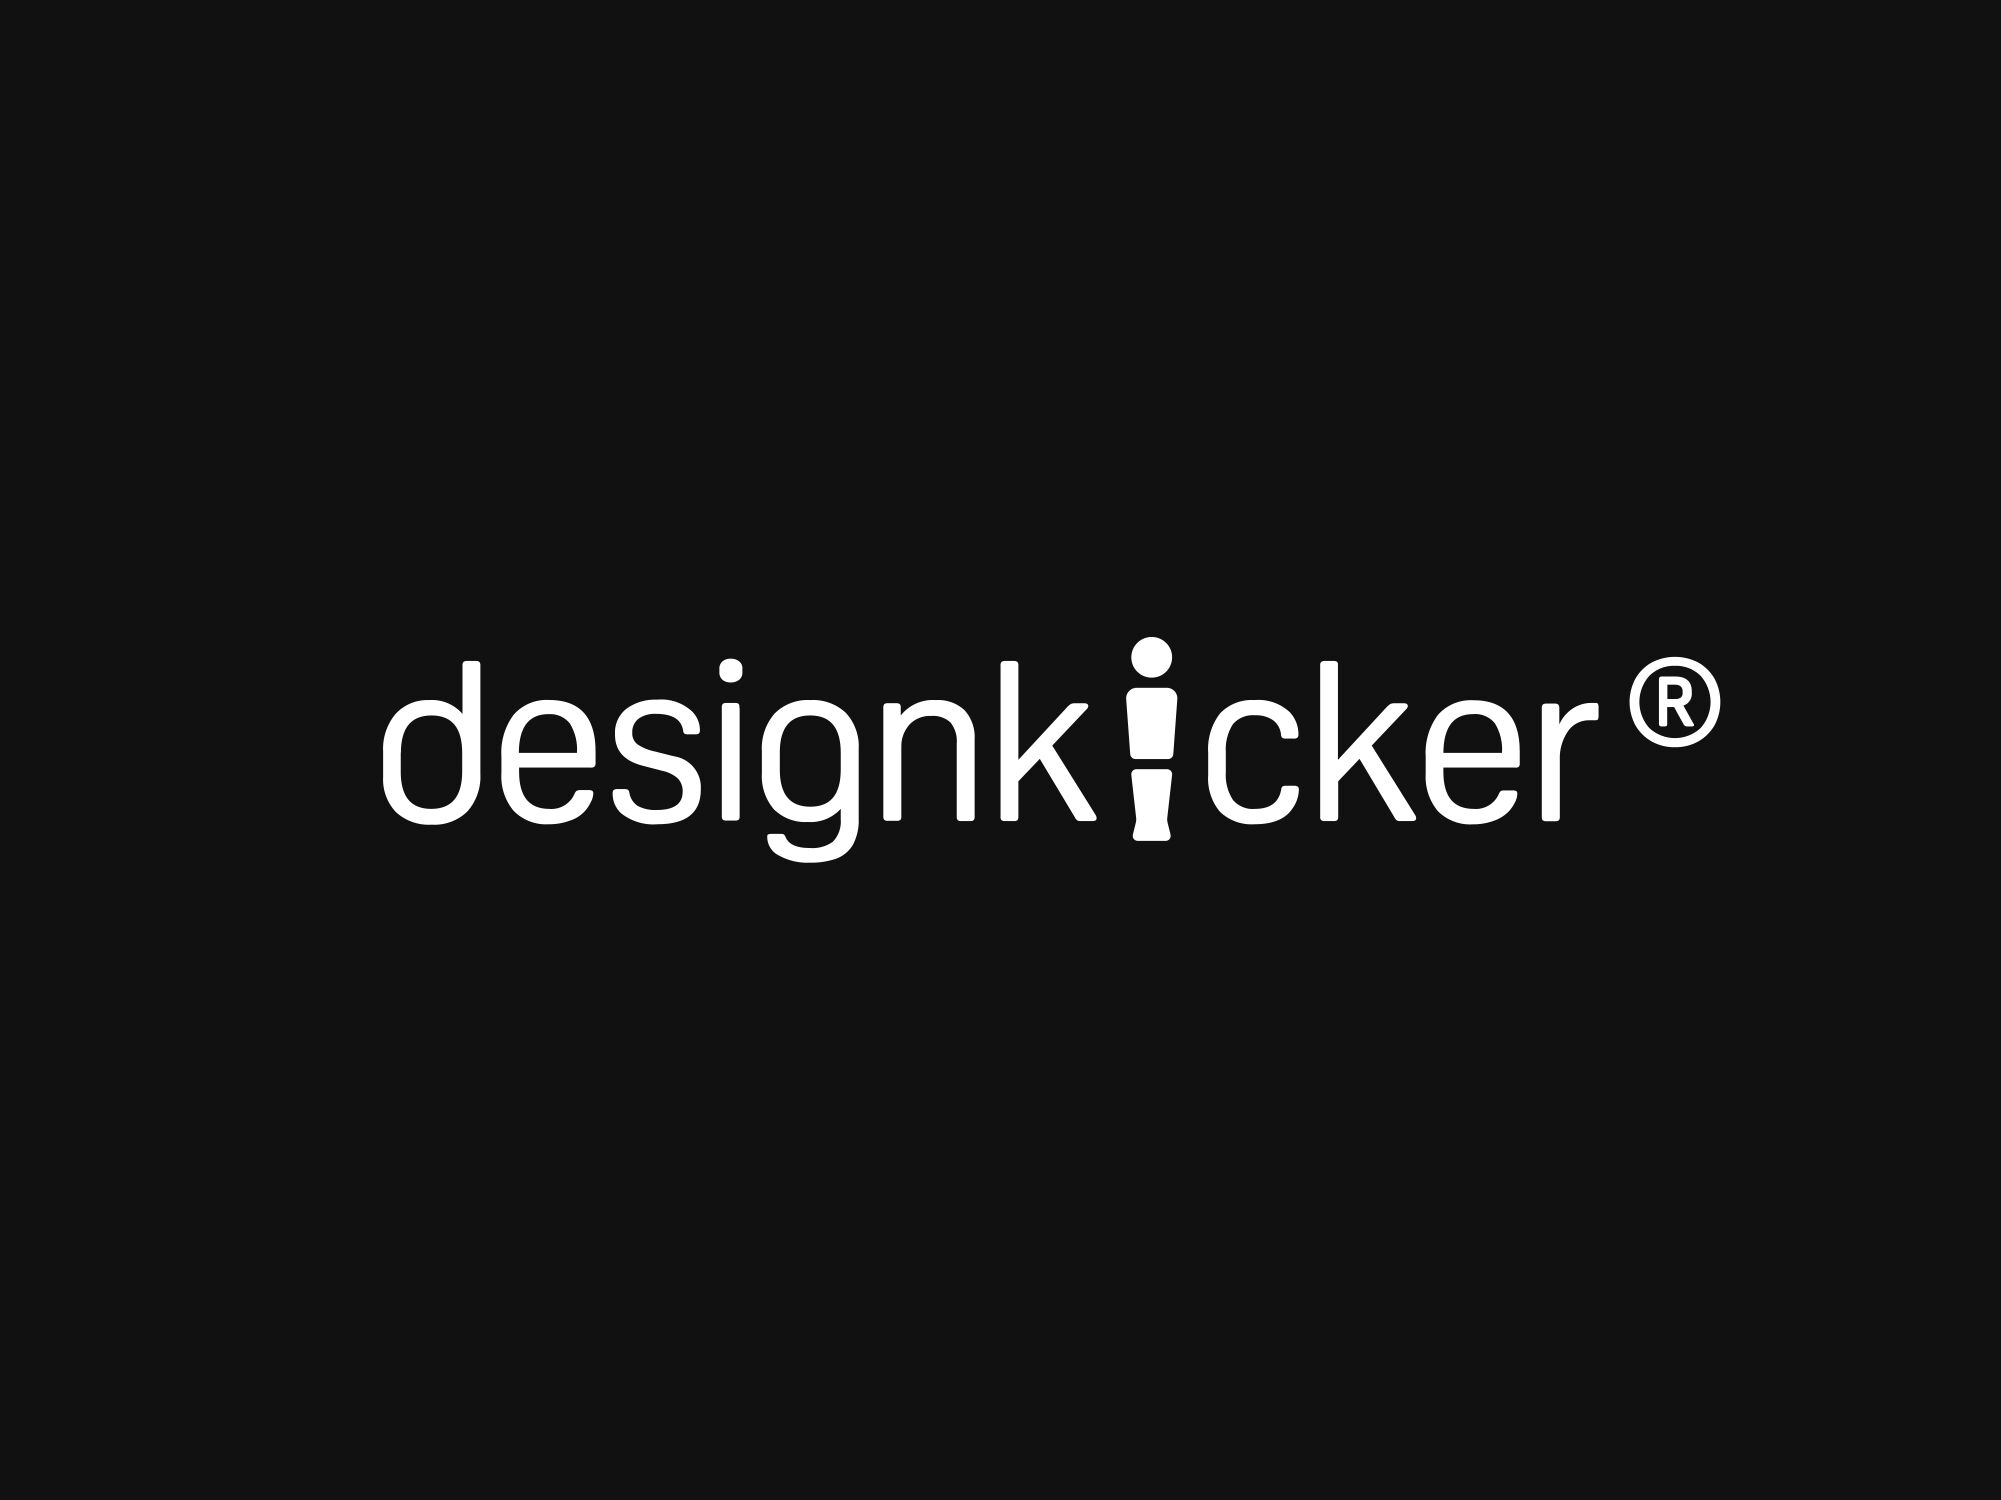 Designkicker logo